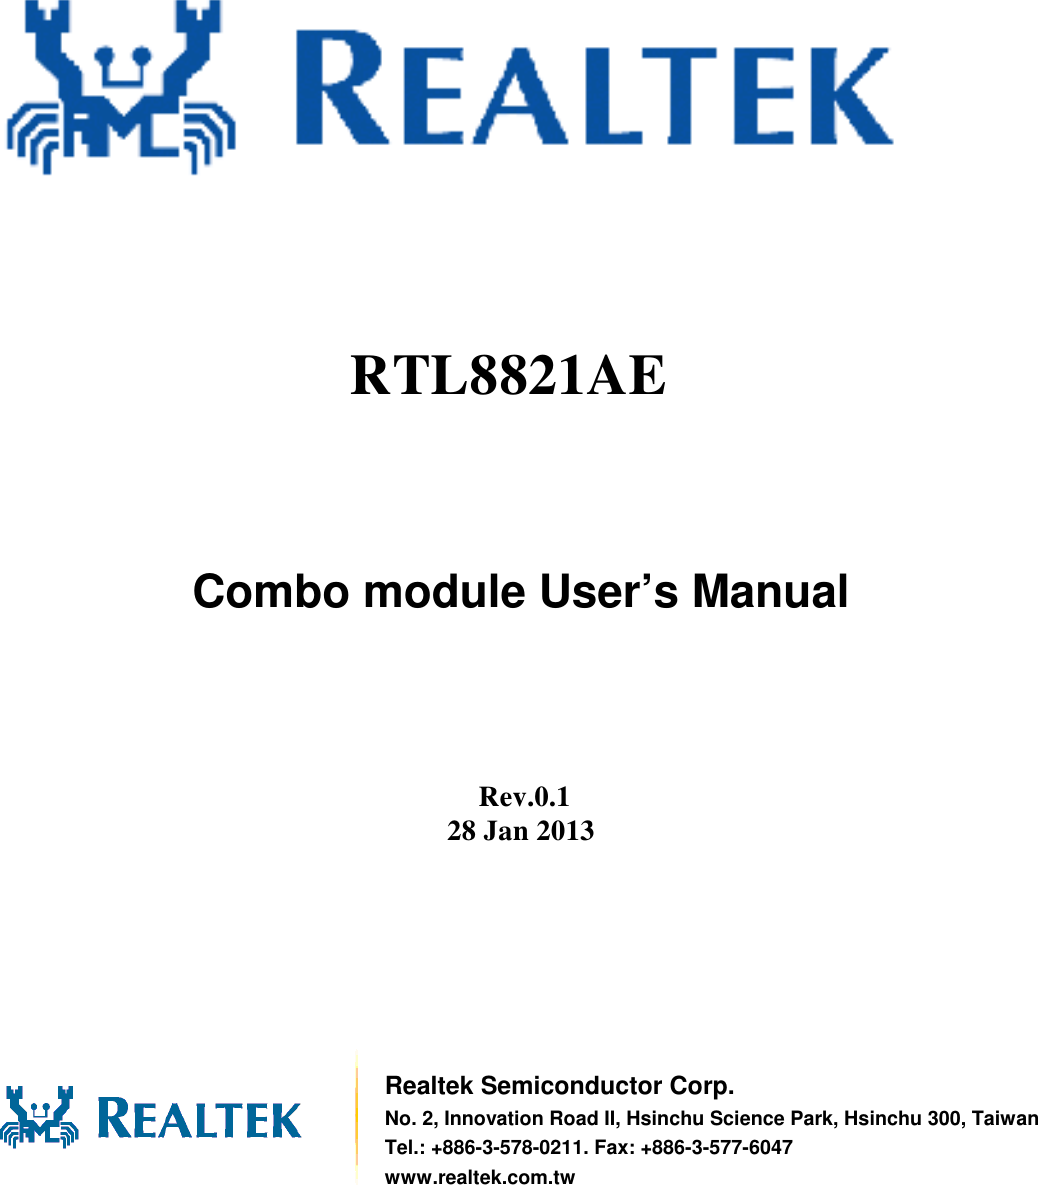                Combo module User’s Manual         Rev.0.1 28 Jan 2013          Realtek Semiconductor Corp. No. 2, Innovation Road II, Hsinchu Science Park, Hsinchu 300, TaiwanTel.: +886-3-578-0211. Fax: +886-3-577-6047 www.realtek.com.tw RTL8821AE 